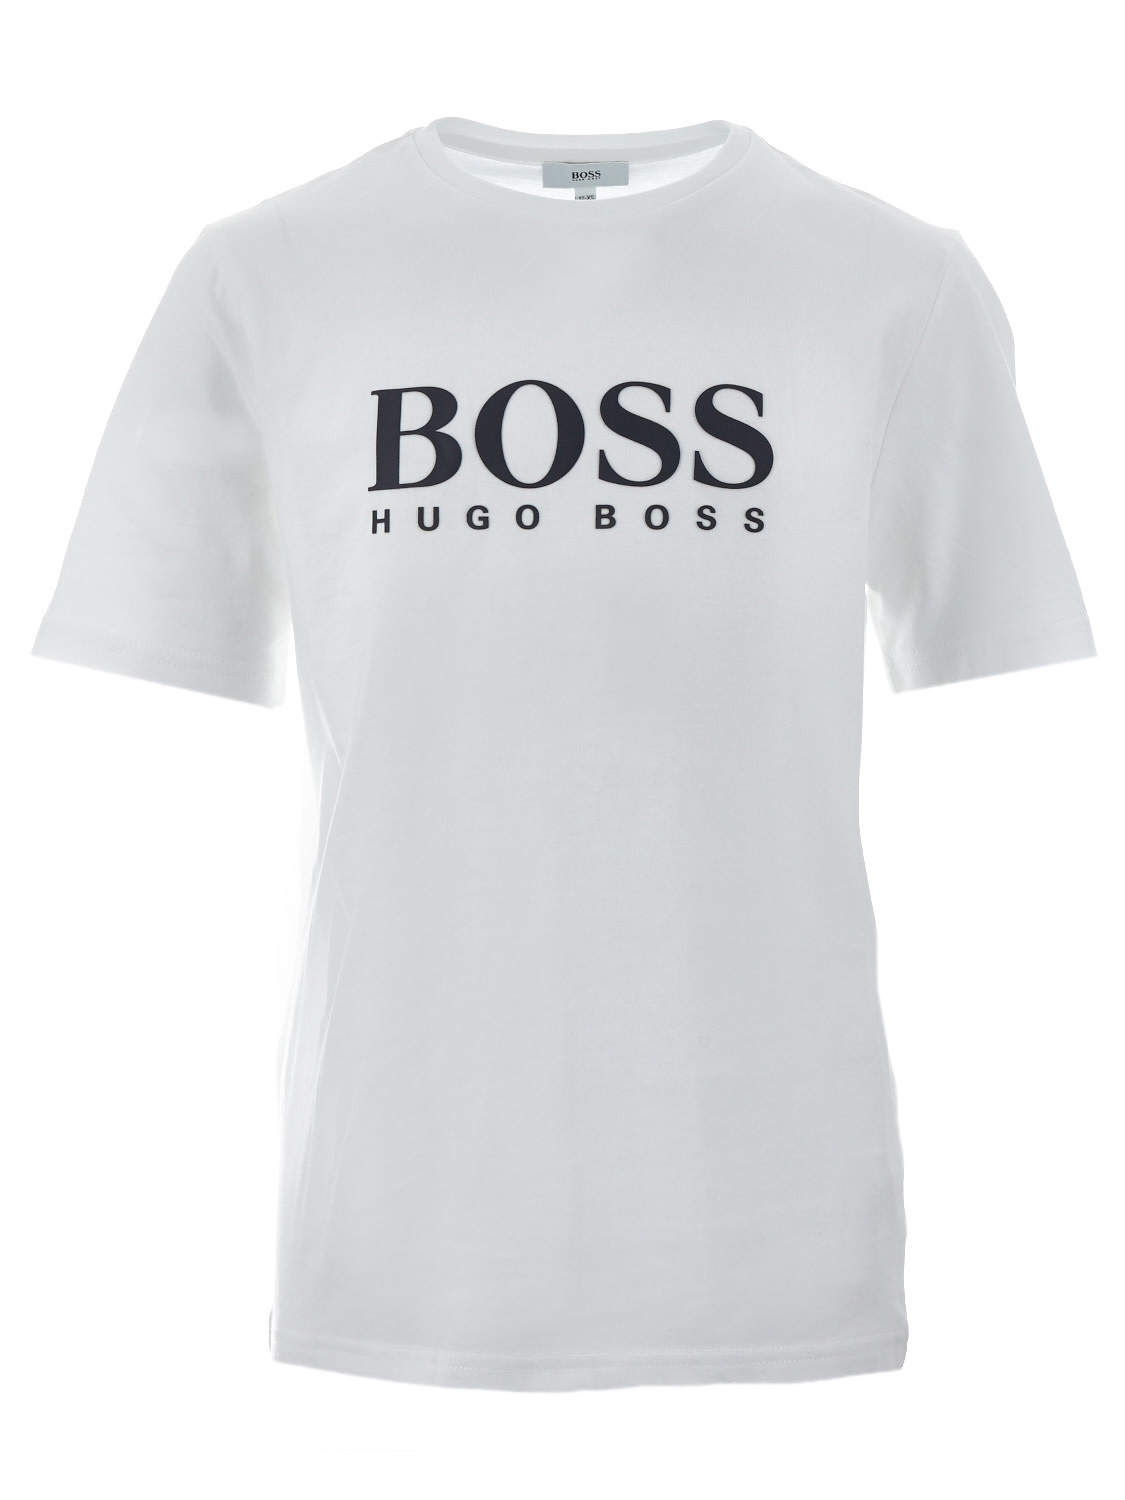 hugo boss shirt